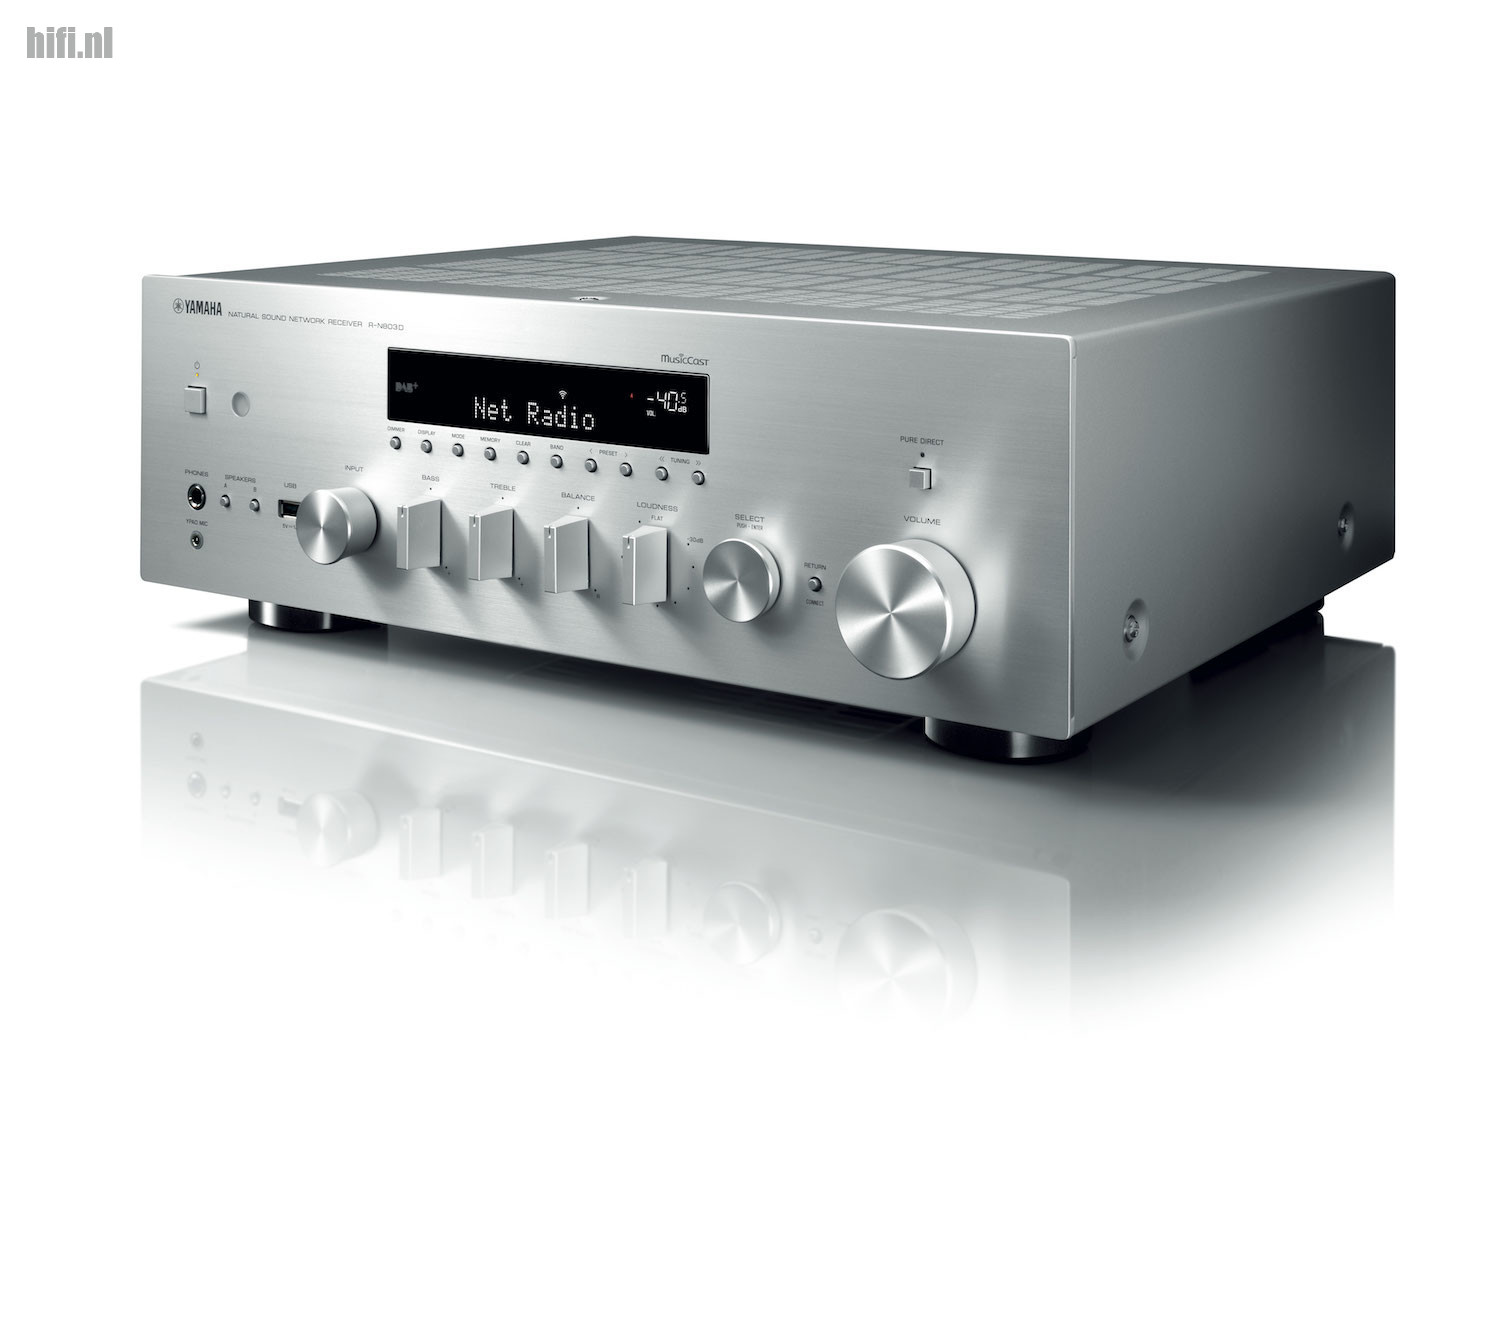 tijger Algebraïsch plak Review Yamaha R N803D stereo receiver met kamercorrectie